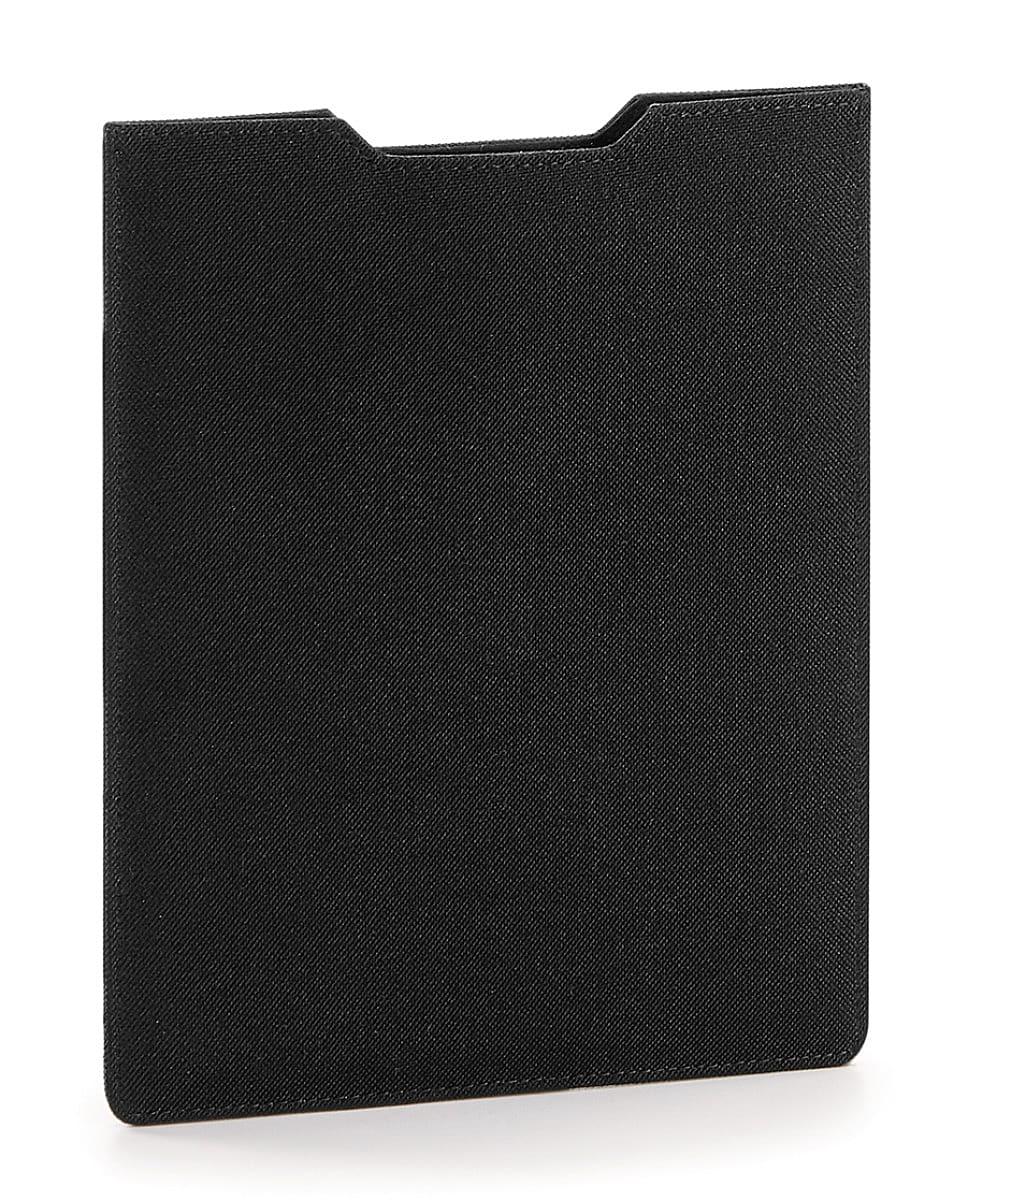 Bagbase Essential iPad Slip in Black (Product Code: BG66)